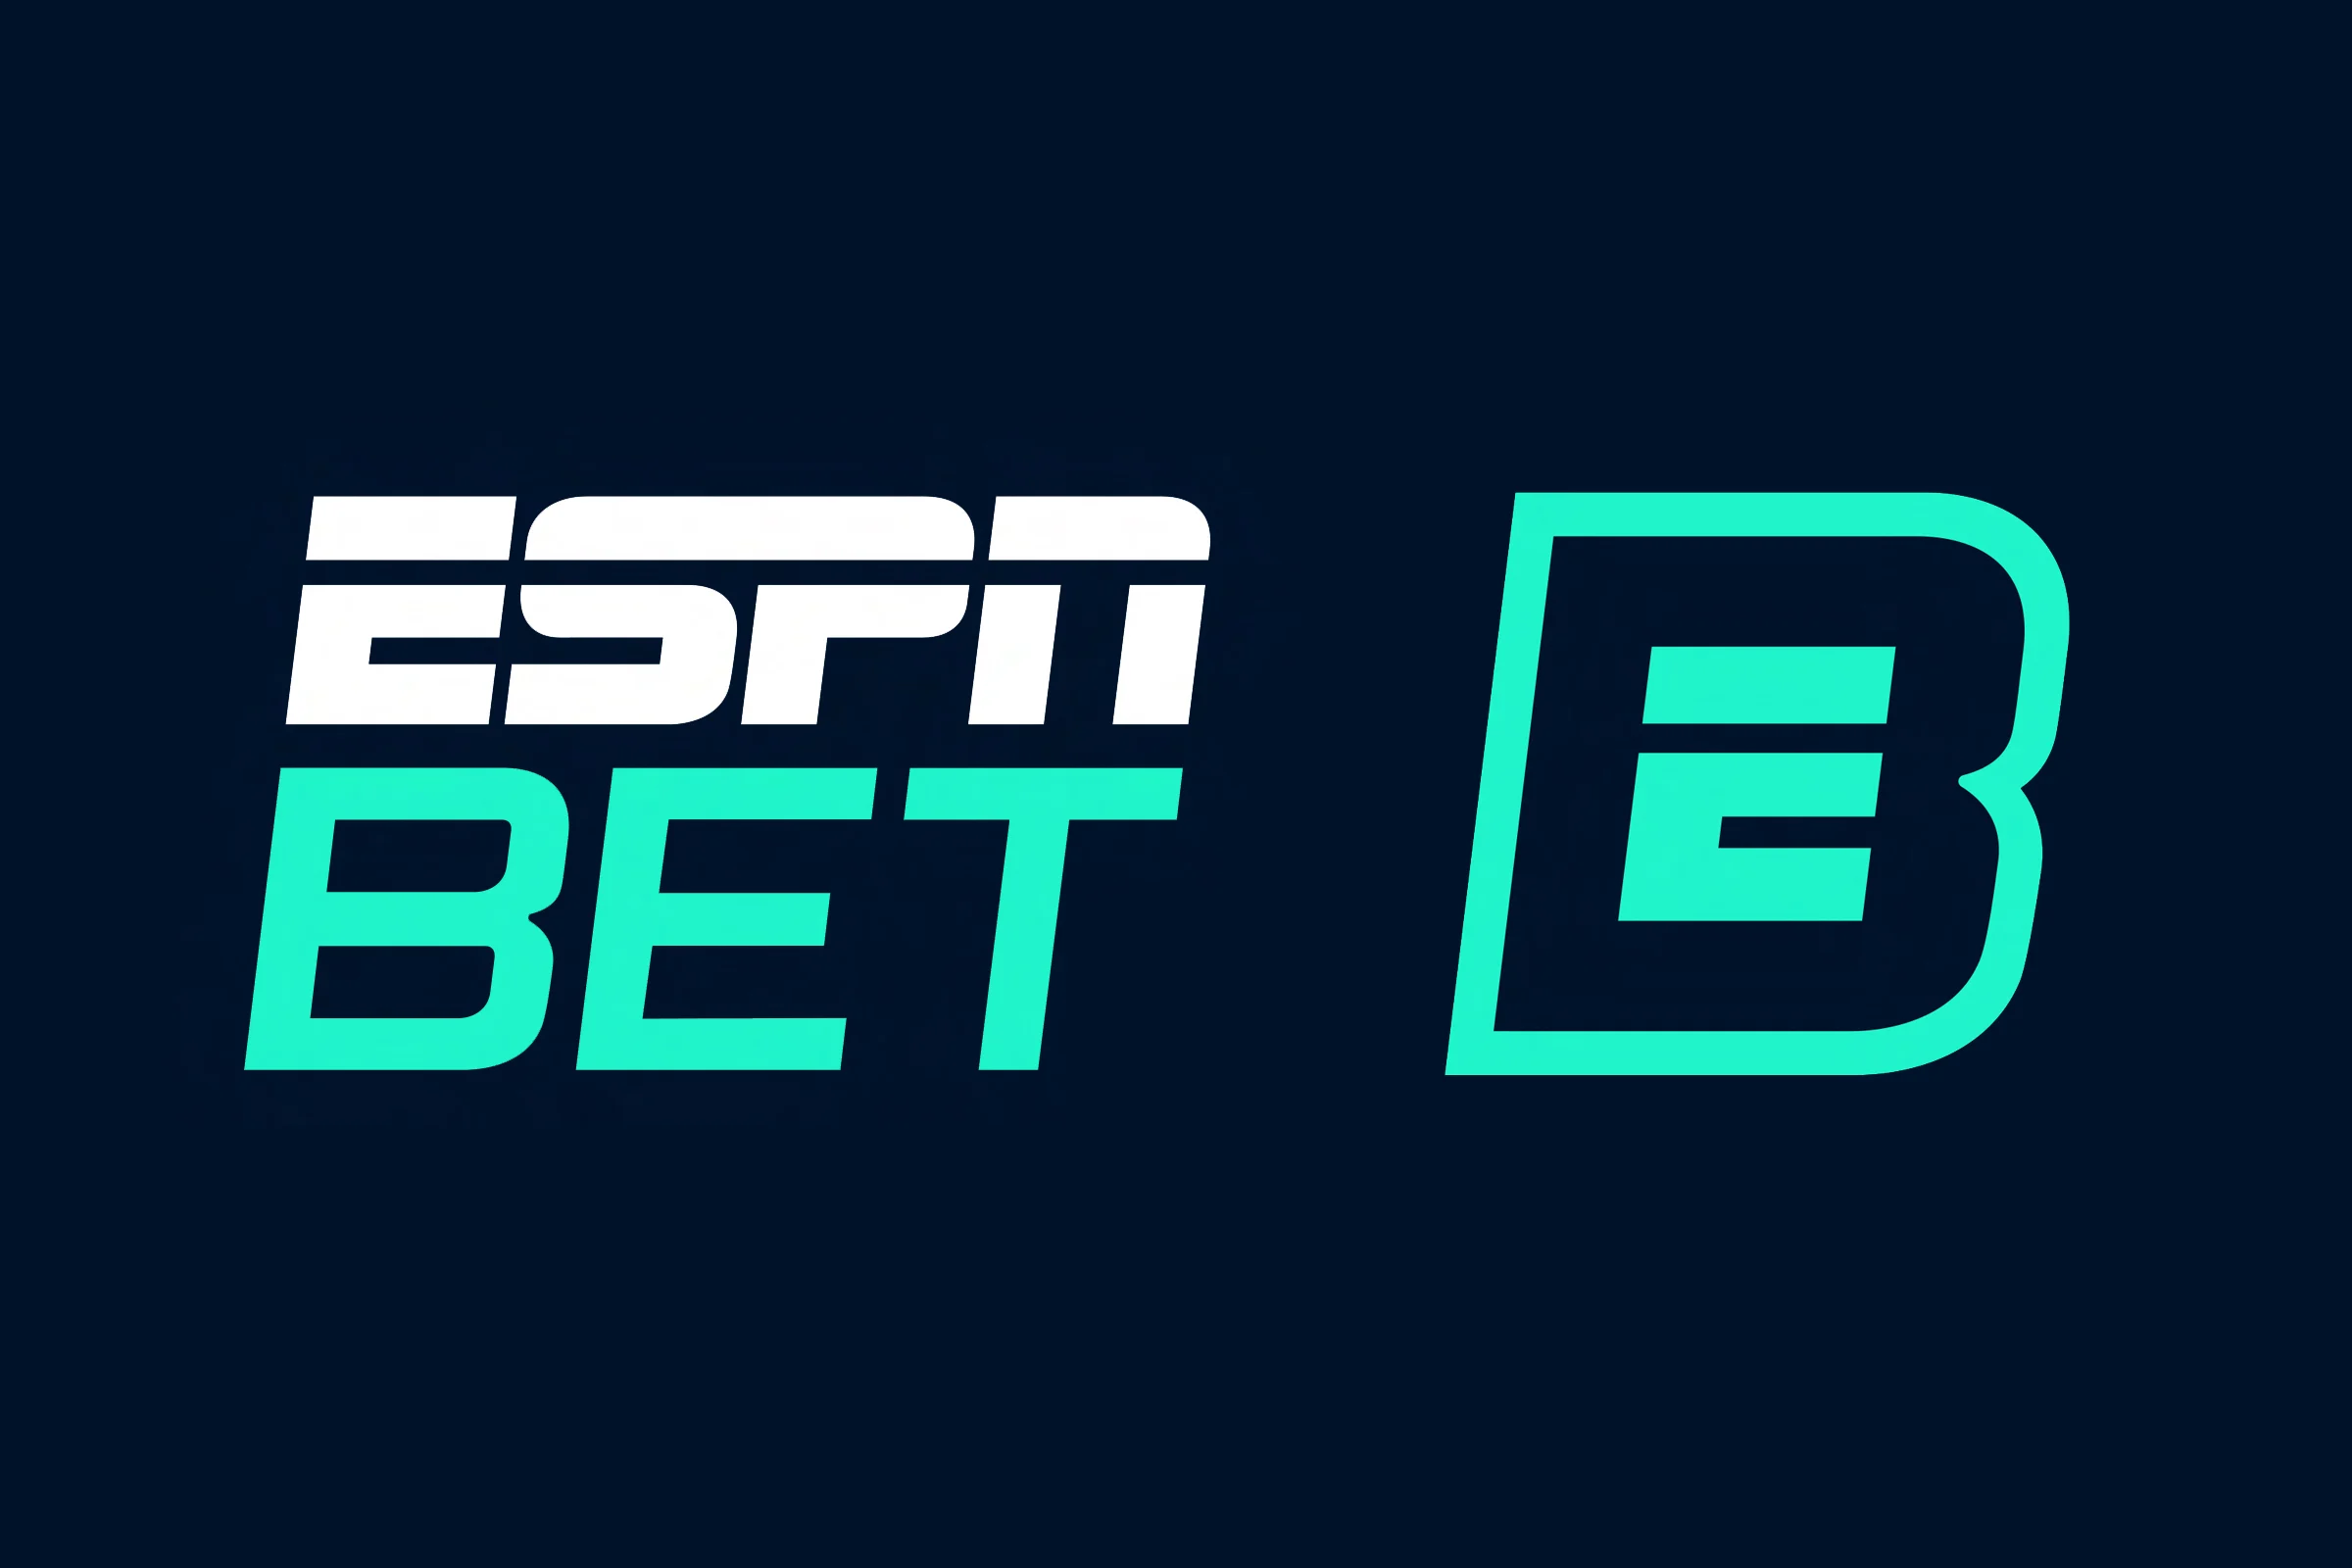 ESPN Bet's new logo.